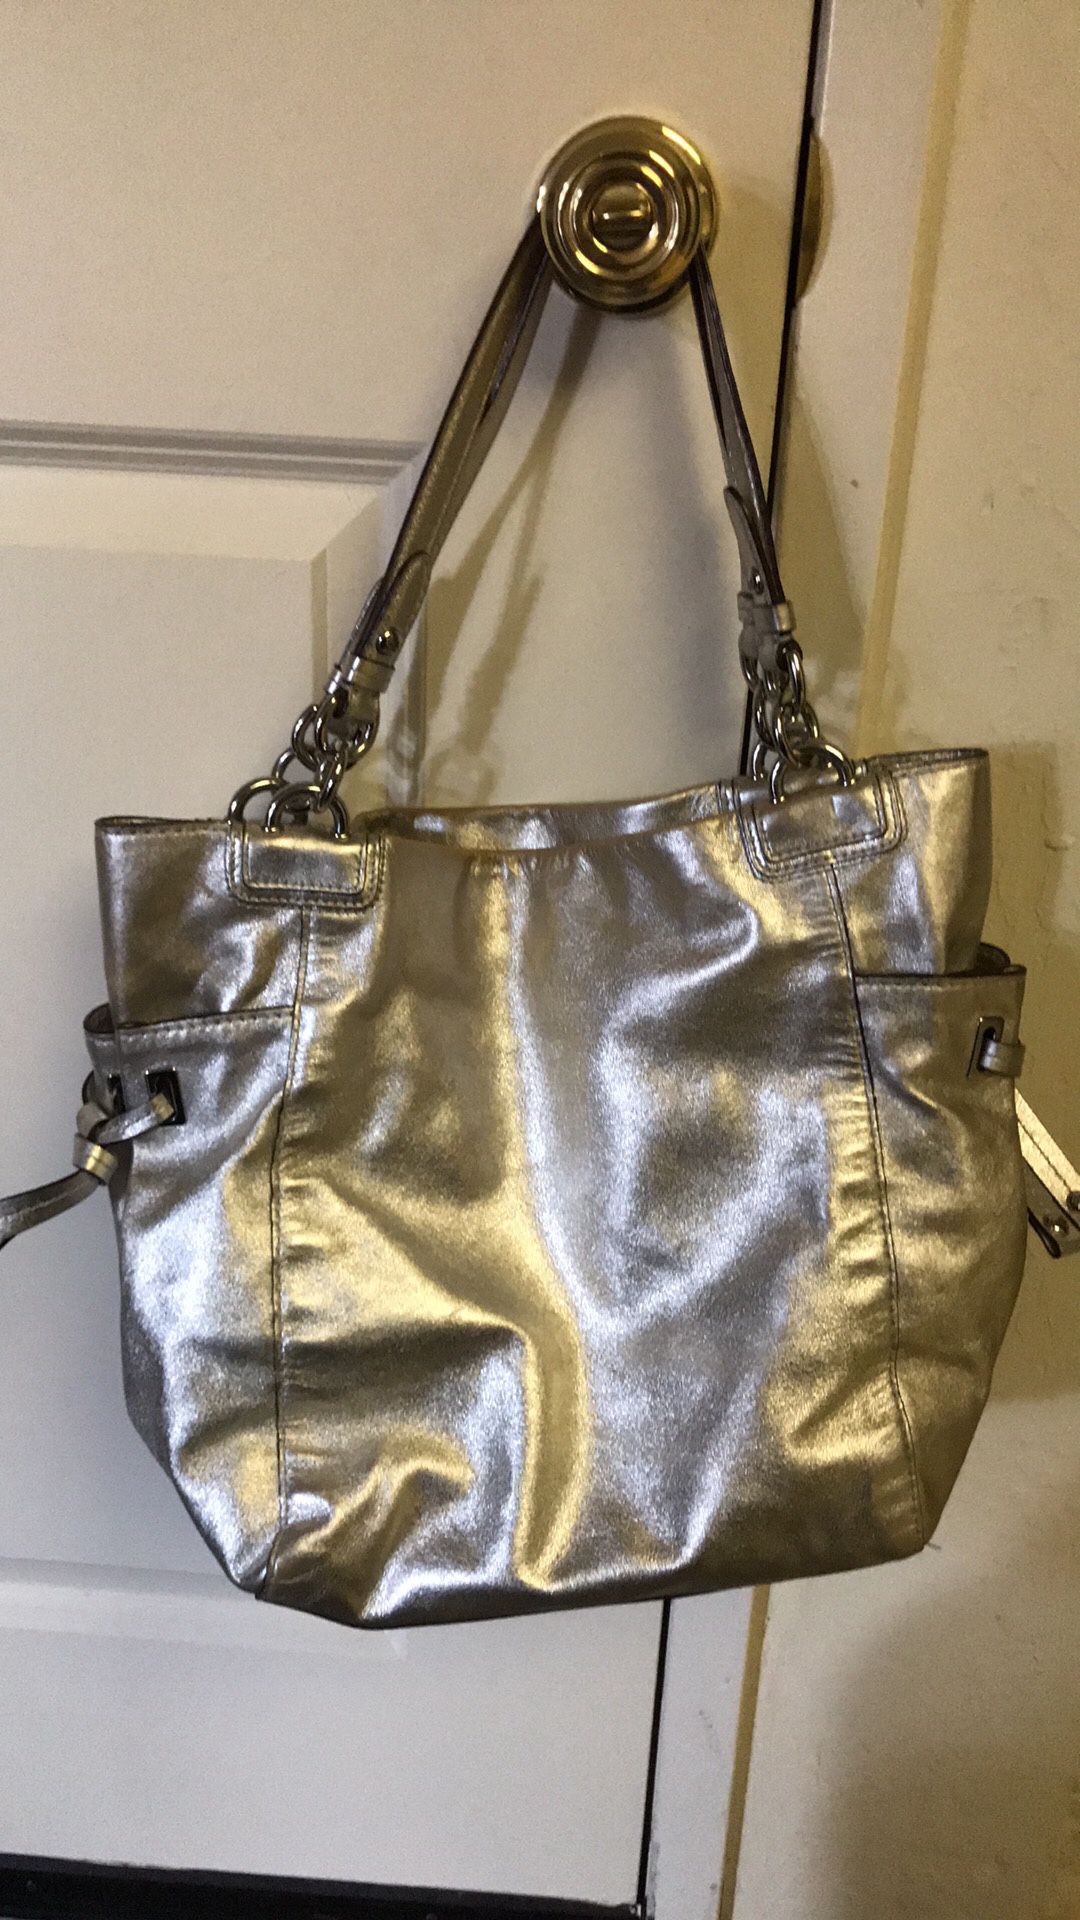 Silver coach purse